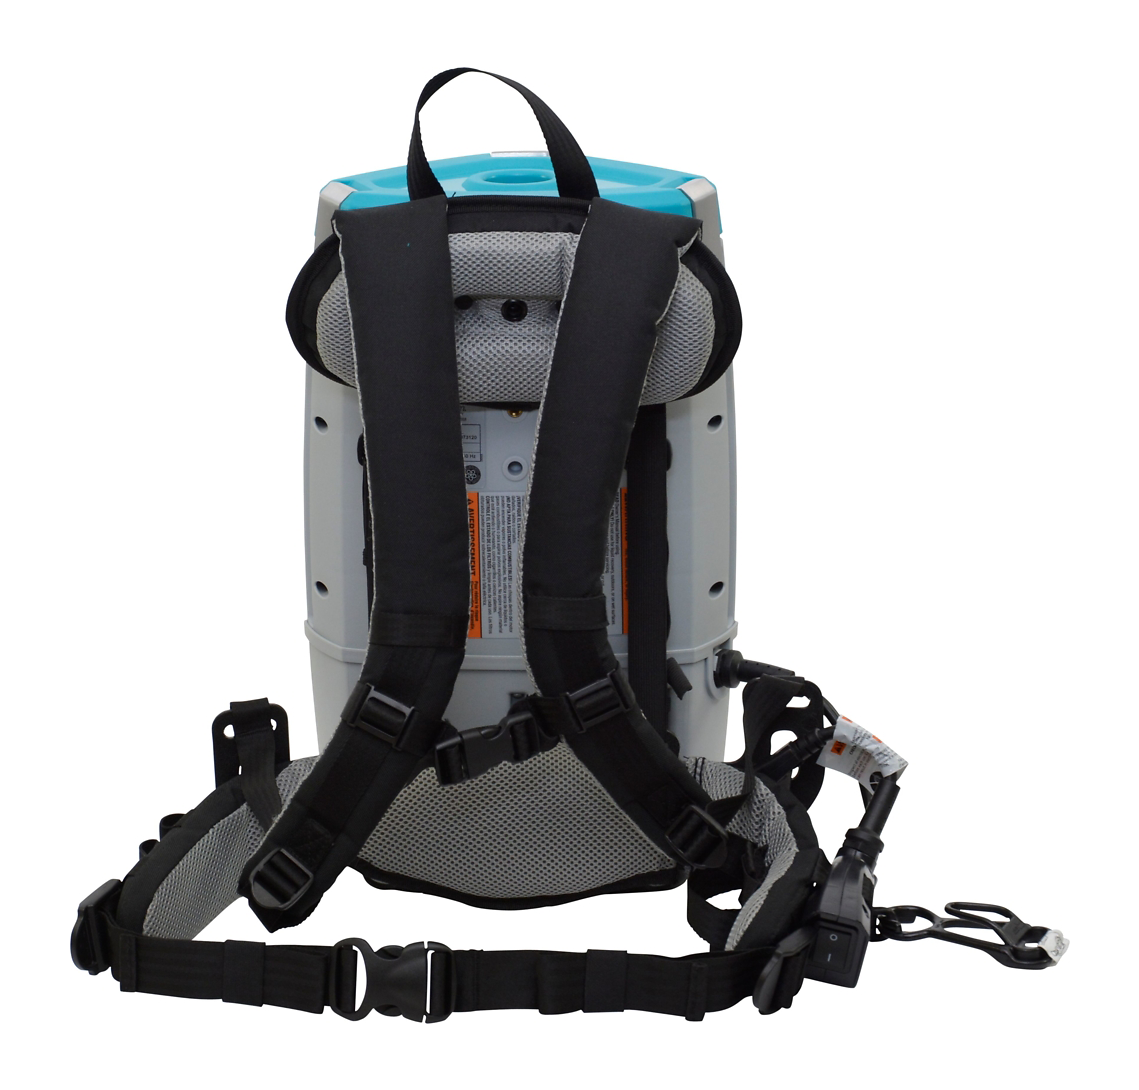 Portovac backpack type vacuum cleaner